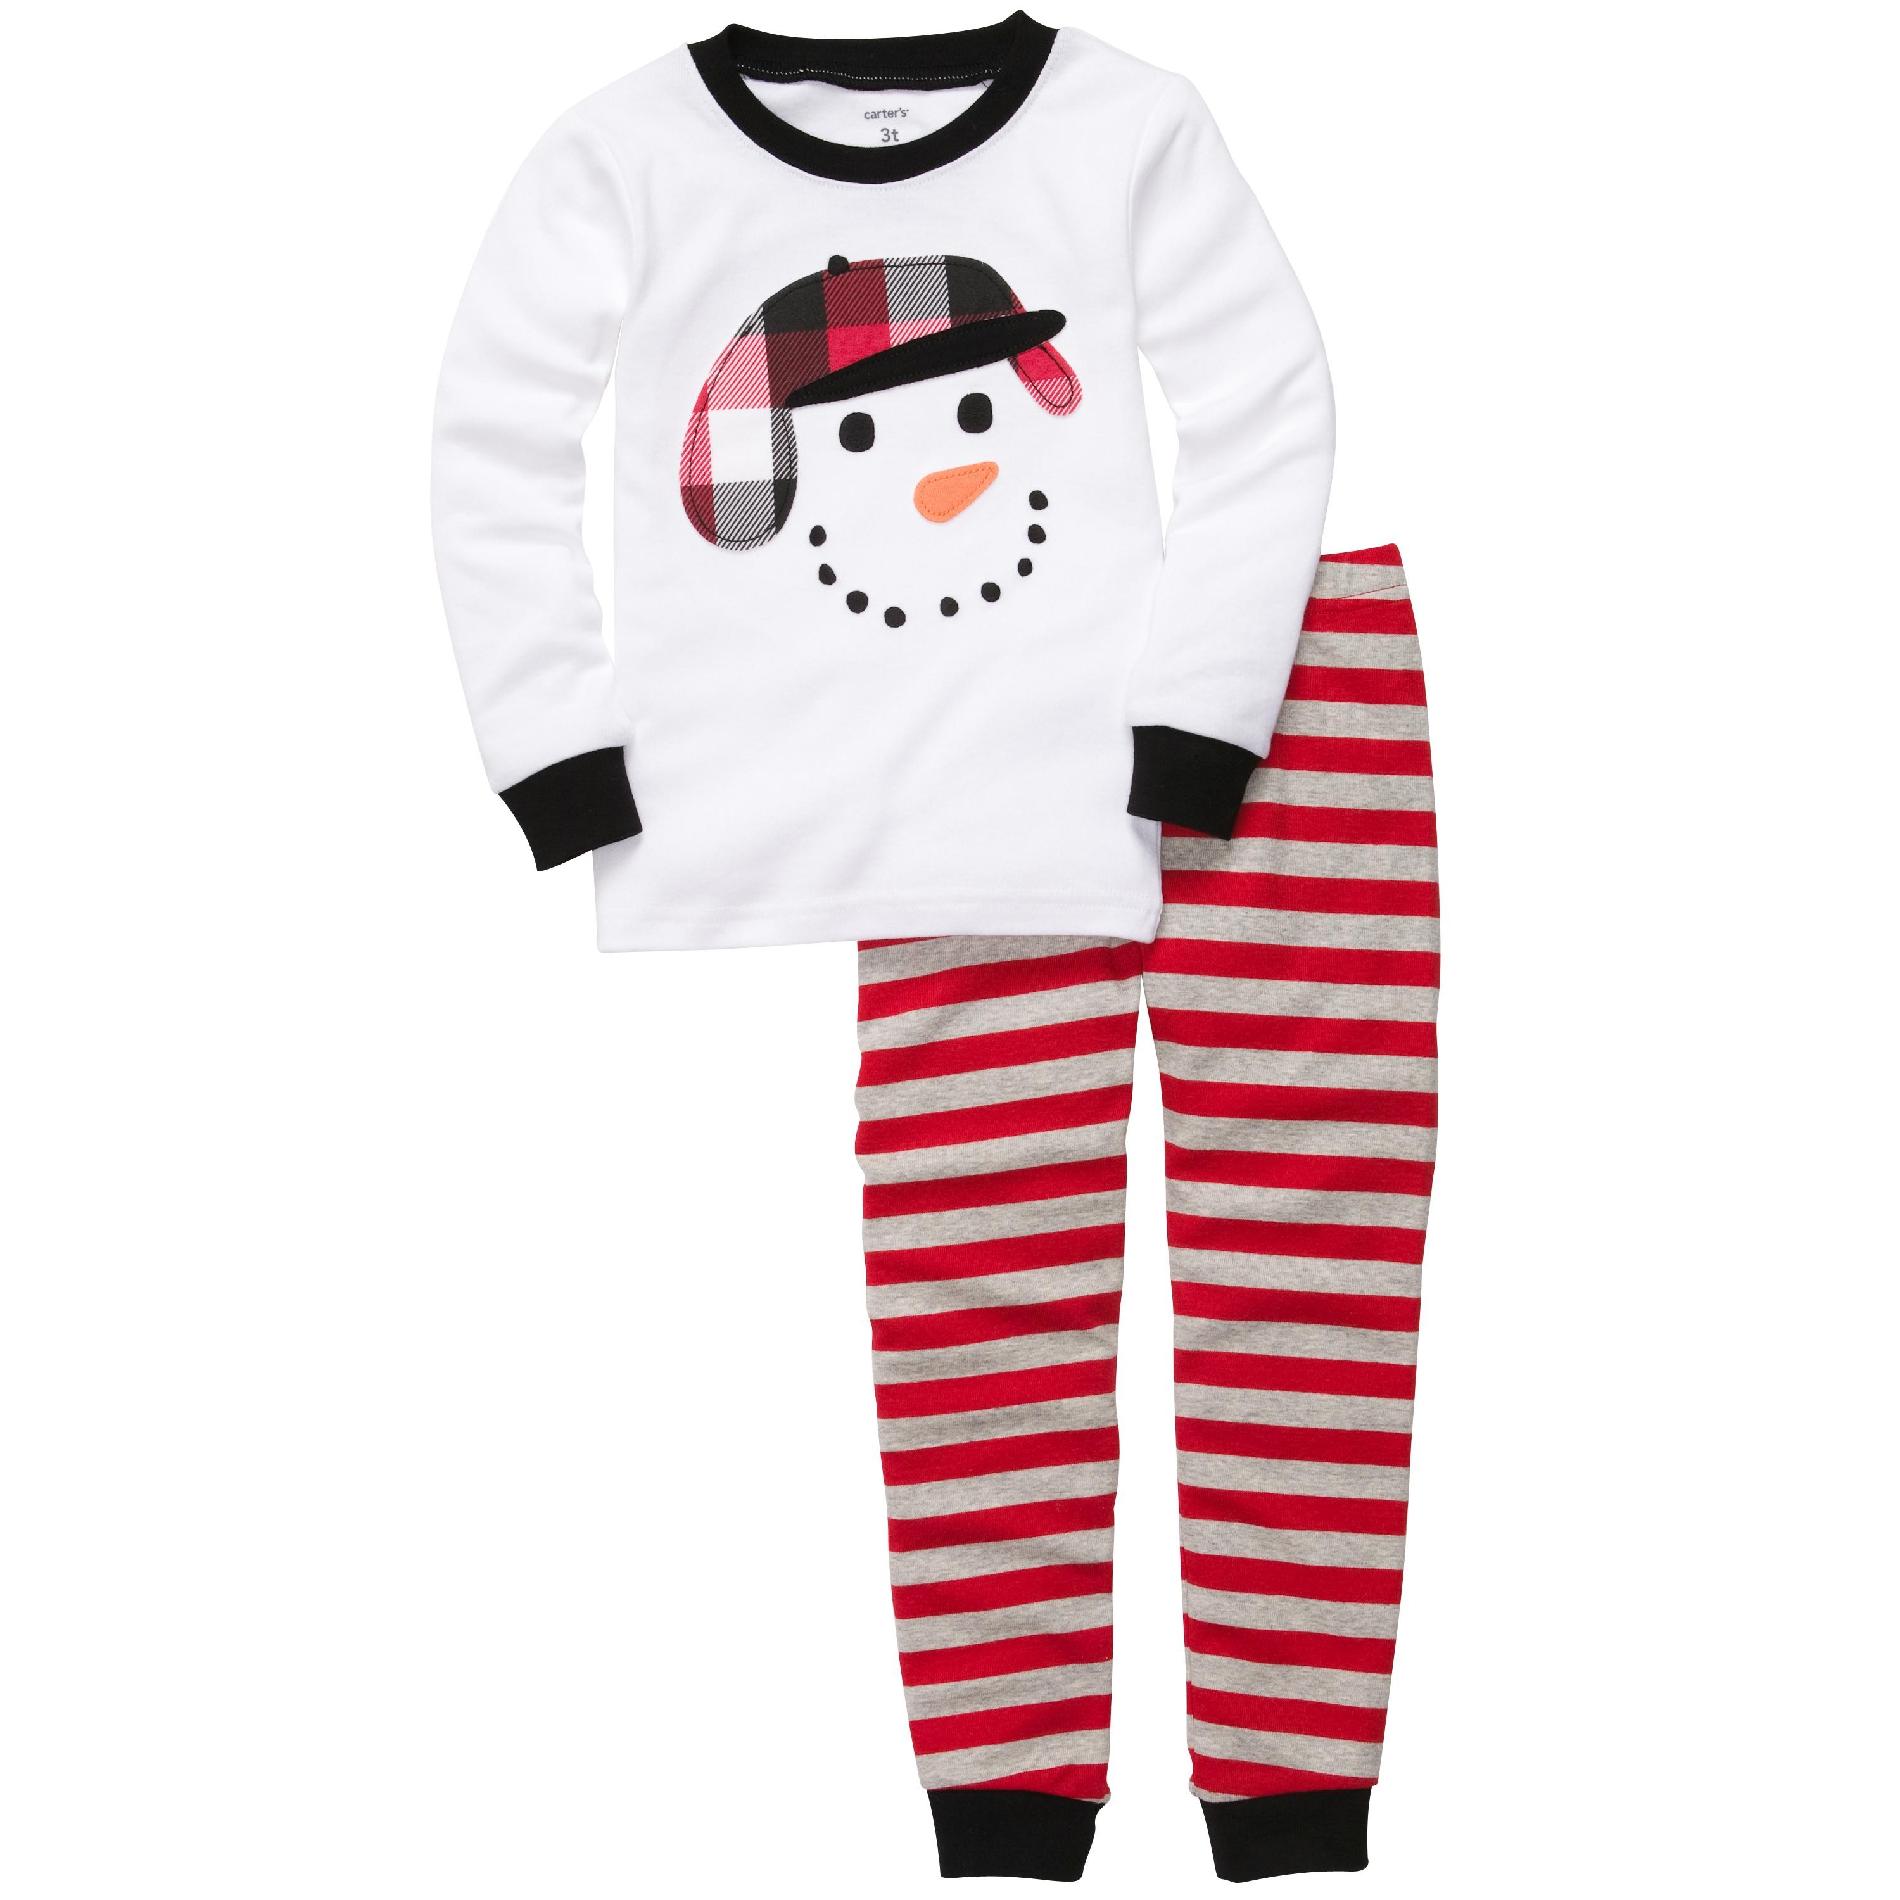 Carter's Infant Boy's Christmas Pajamas Holiday Snowman